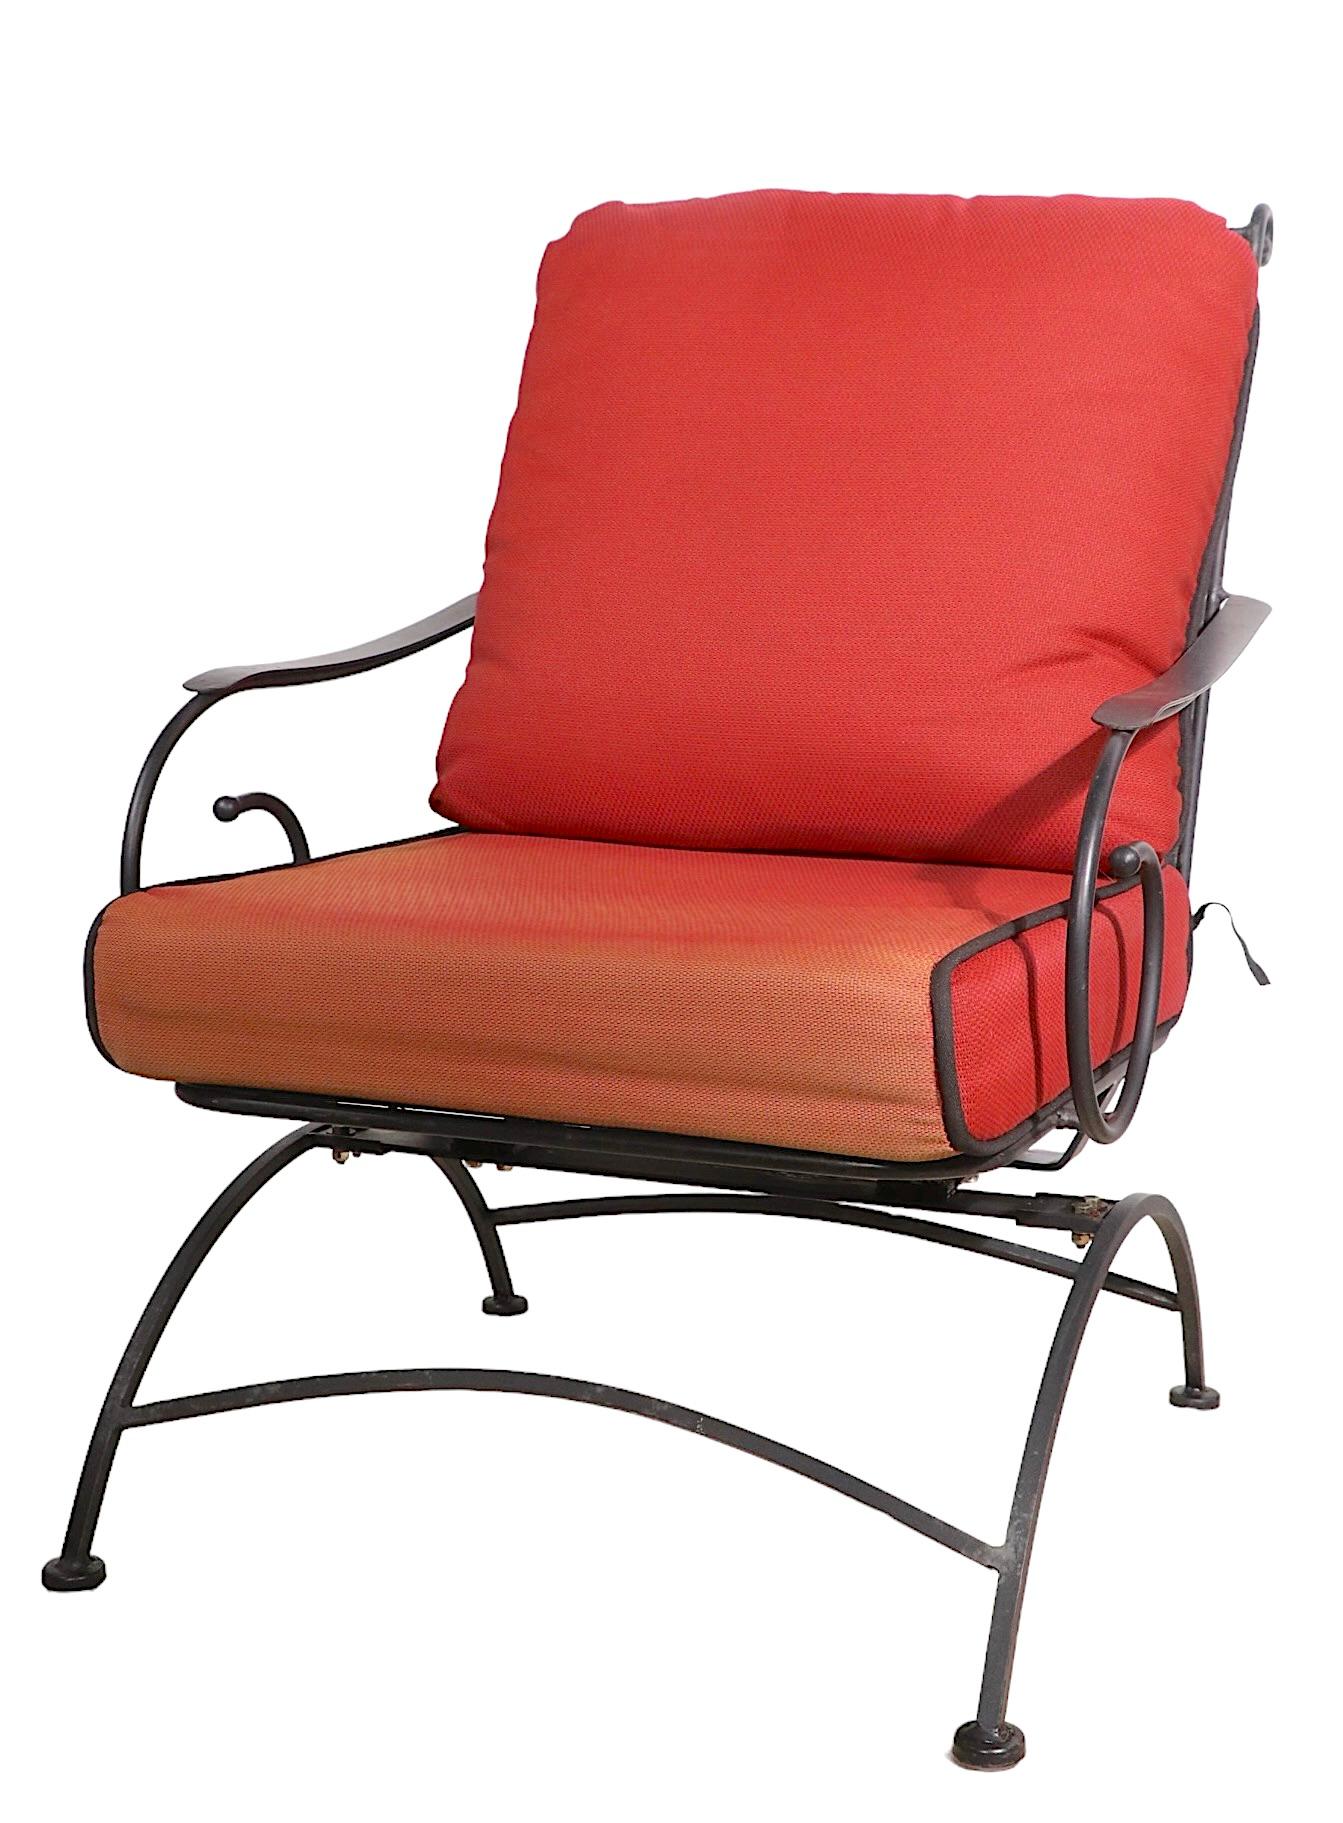 Pr. Wrought Iron Platform Rocking Chairs att. to Woodard c. 1970/1980's For Sale 1